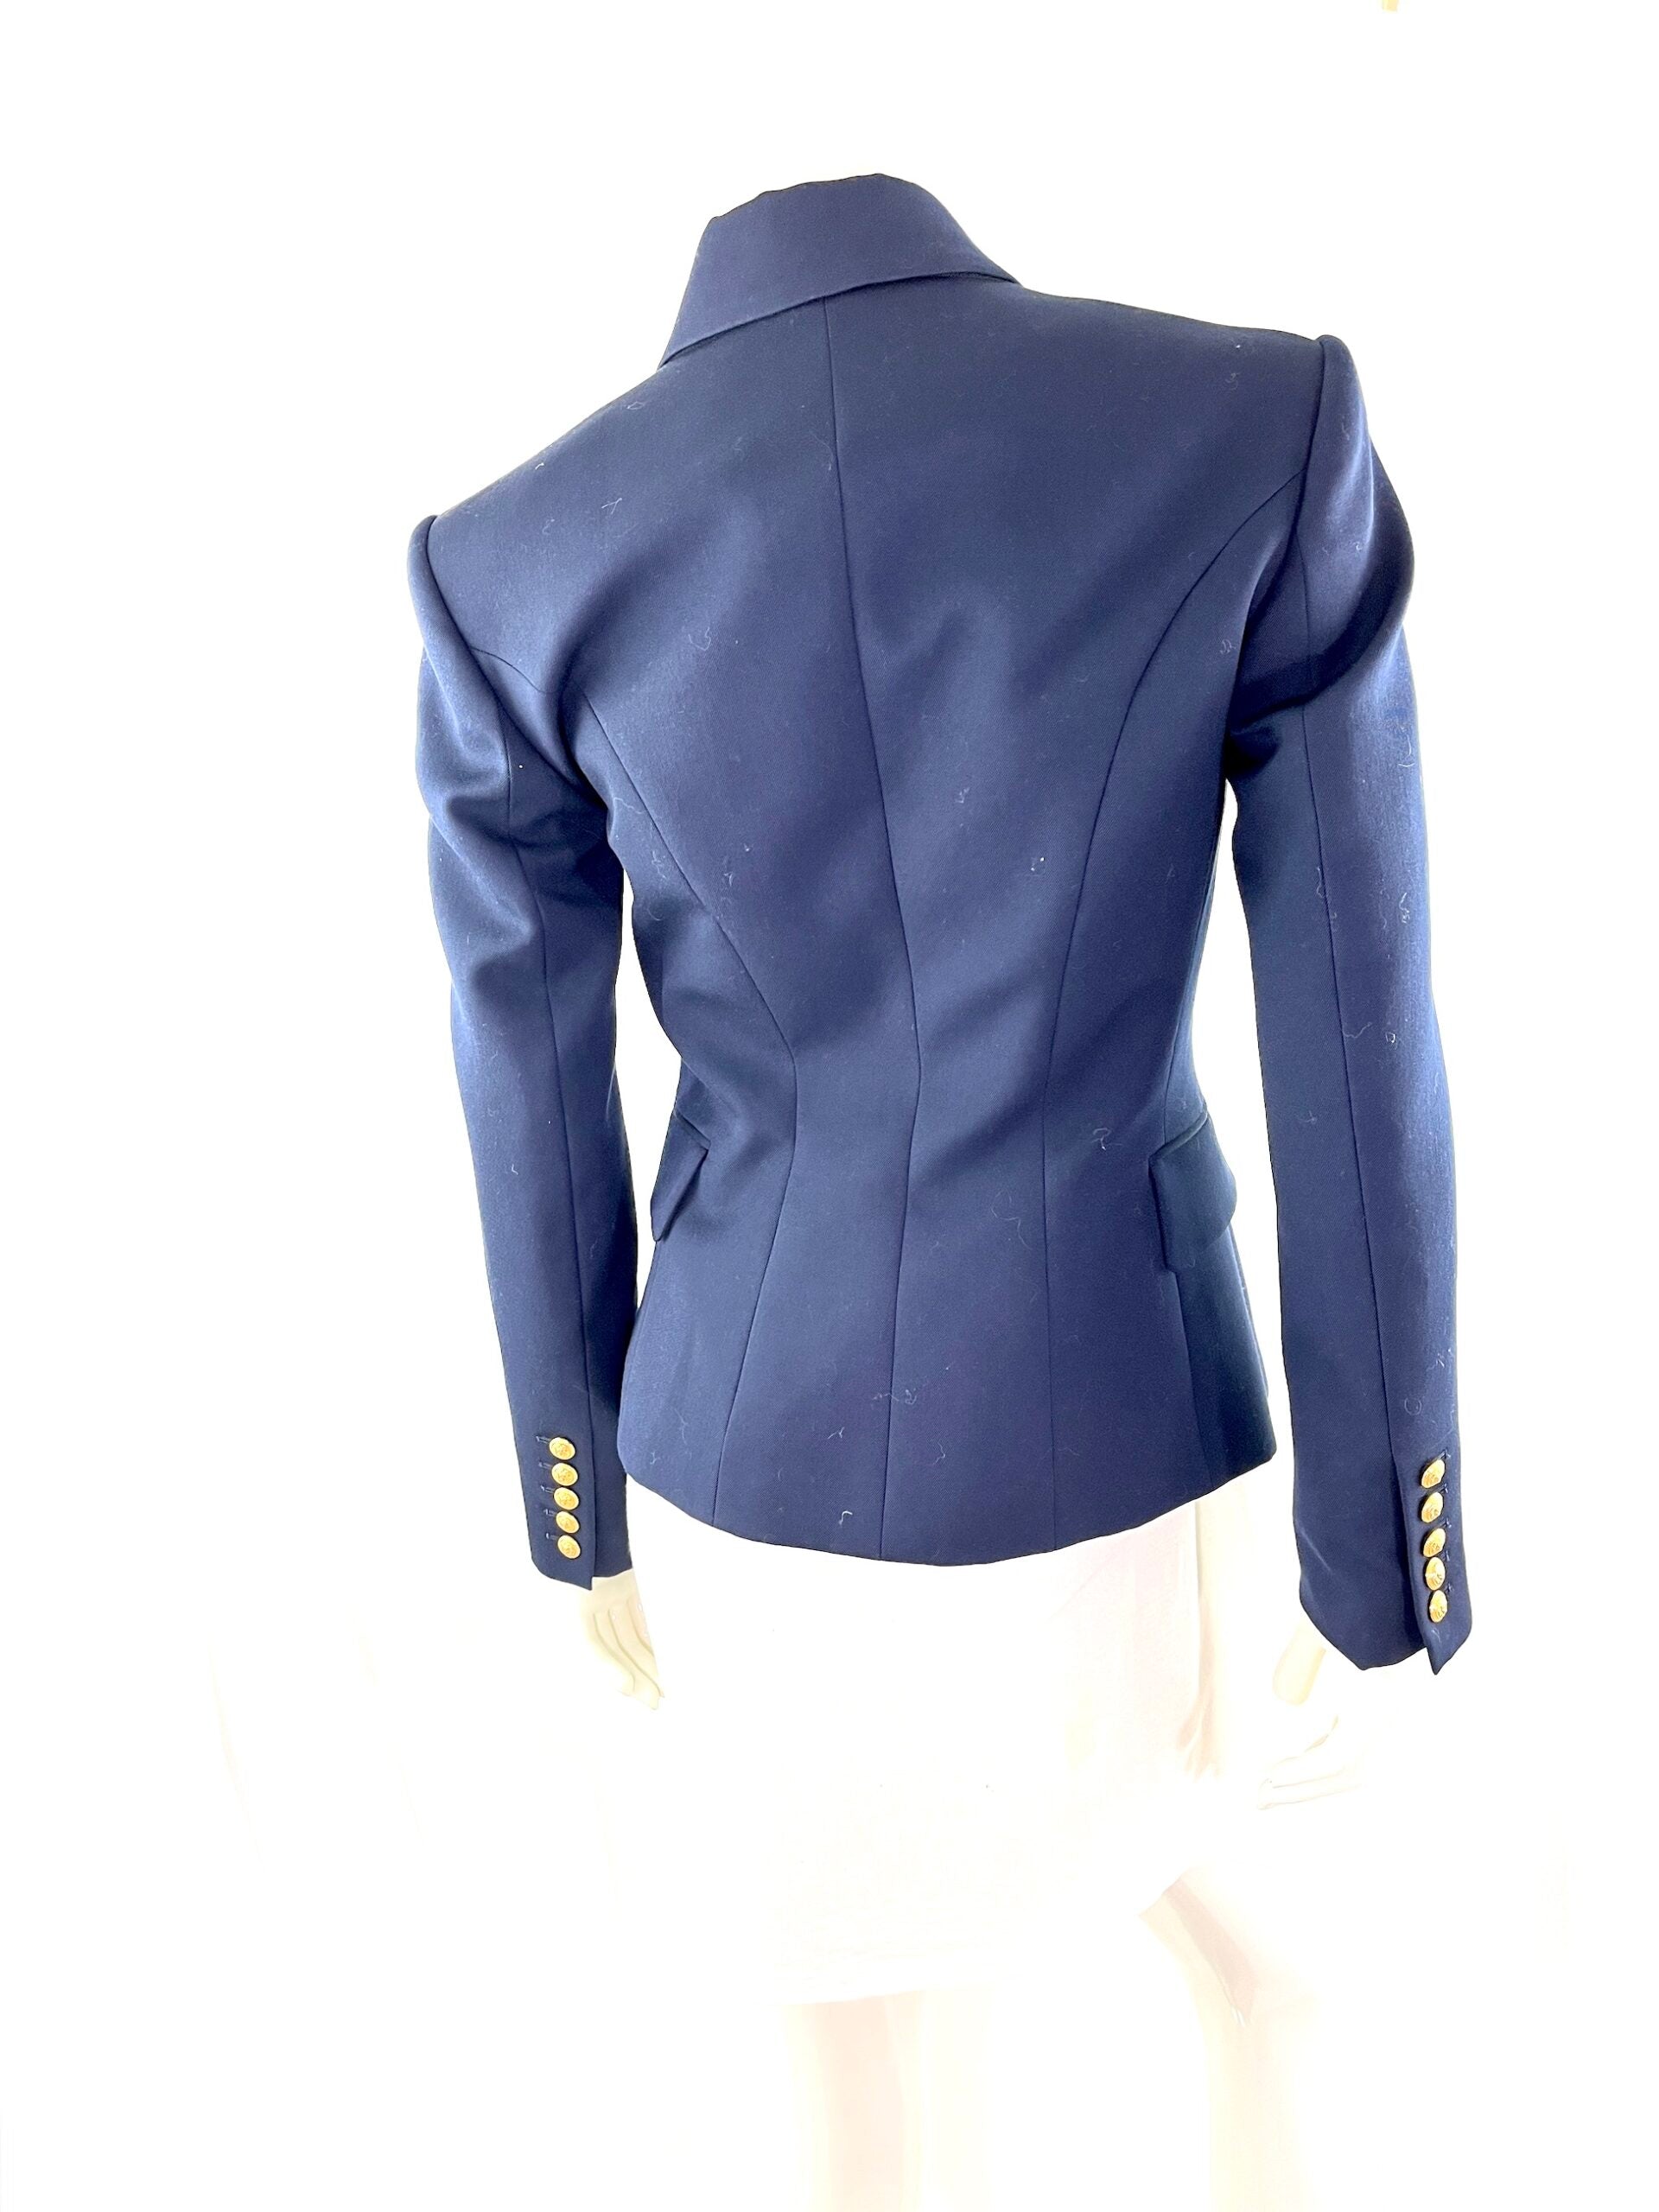 Balmain Navy Blue Gold Button Embellished Wool Blazer Jacket 38